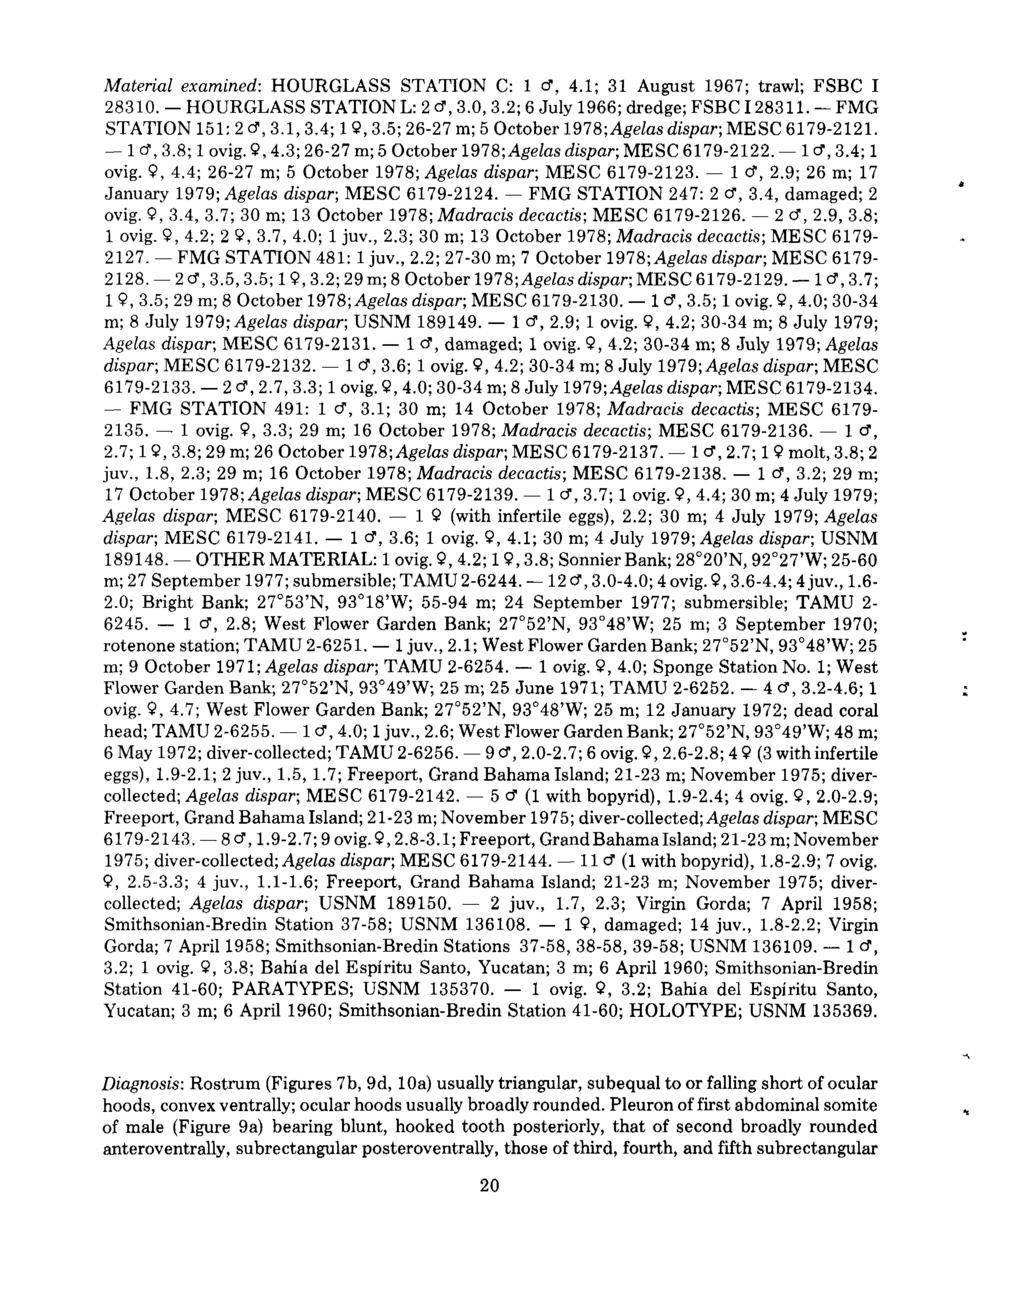 Material examined: HOURGLASS STATION C: 1 cf, 4.1; 31 August 1967; trawl; FSBC I 28310. HOURGLASS STATION L: 2 cf, 3.0, 3.2; 6 July 1966; dredge; FSBC 128311. FMG STATION 151: 2 cf, 3.1, 3.4; 1 9, 3.